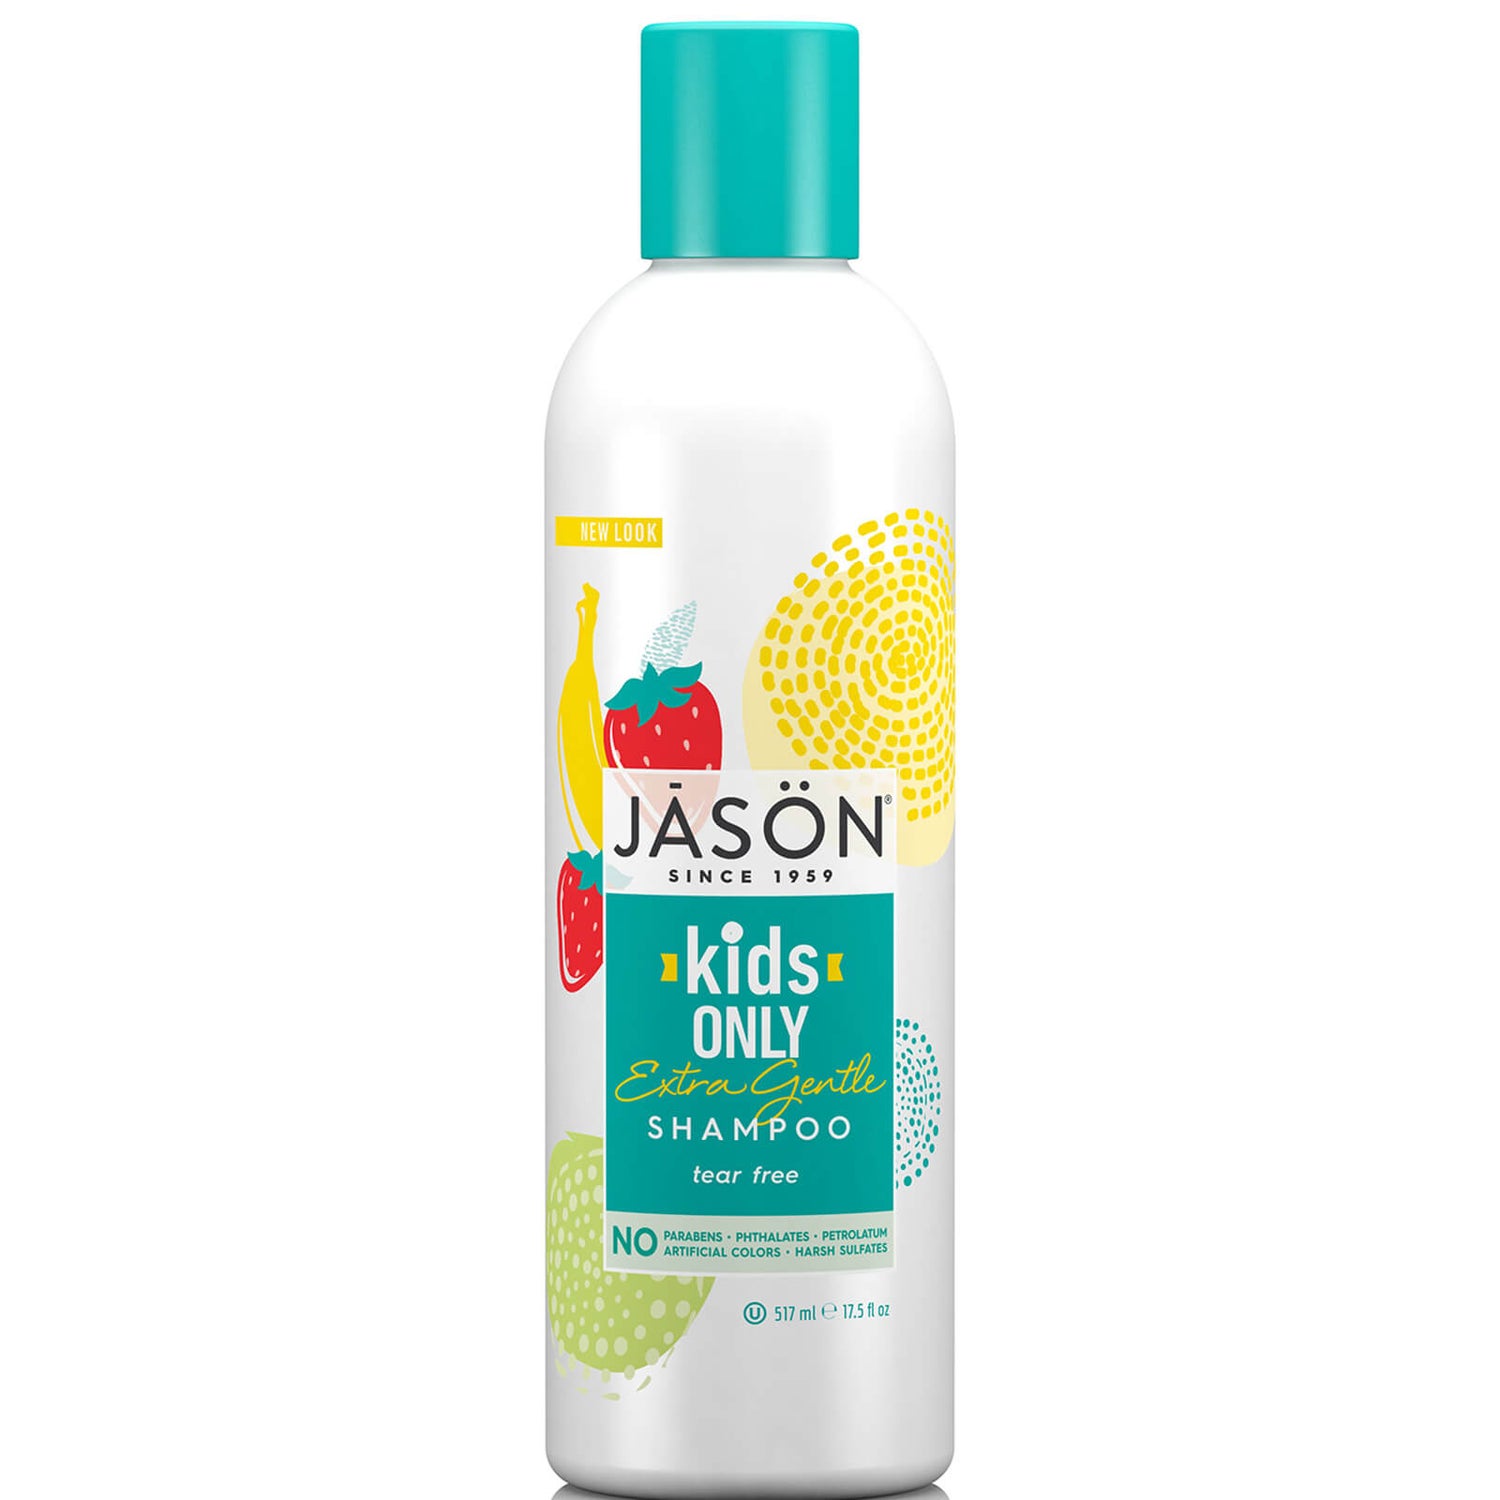 JASON KIDS ONLY! Extra Sanftes Shampoo 517ml